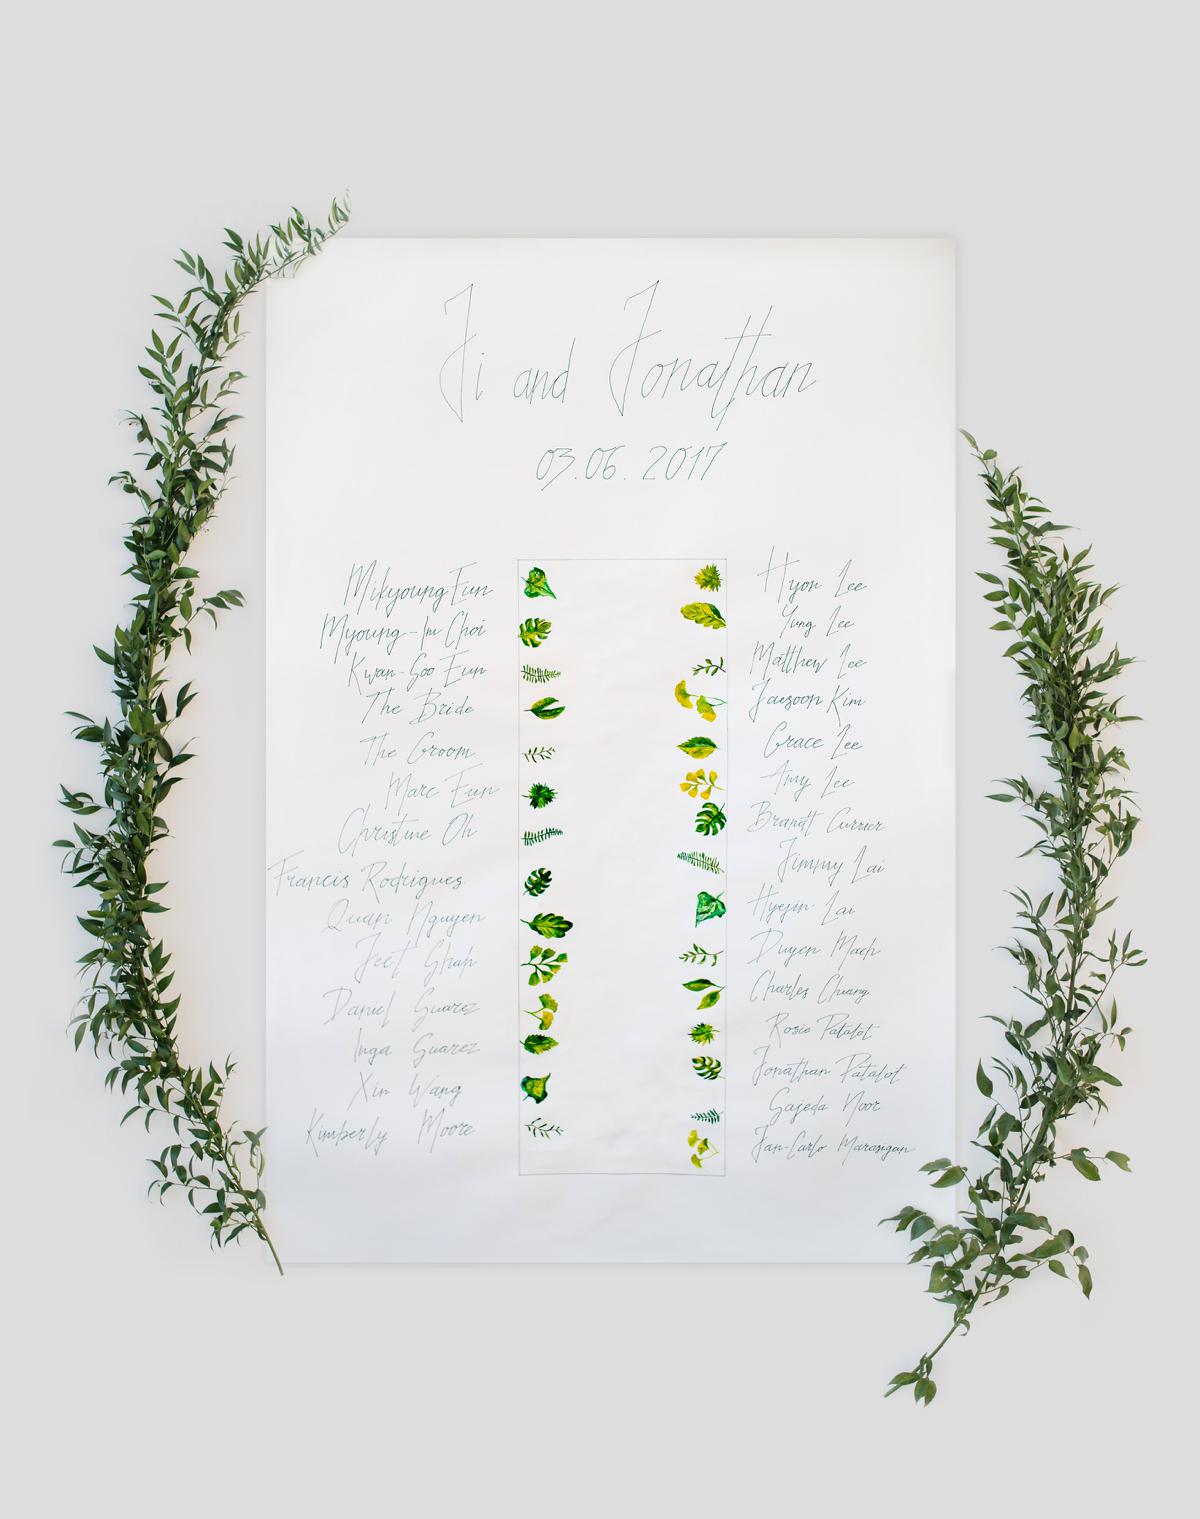 Handprinted sitting chart at a Santorini wedding